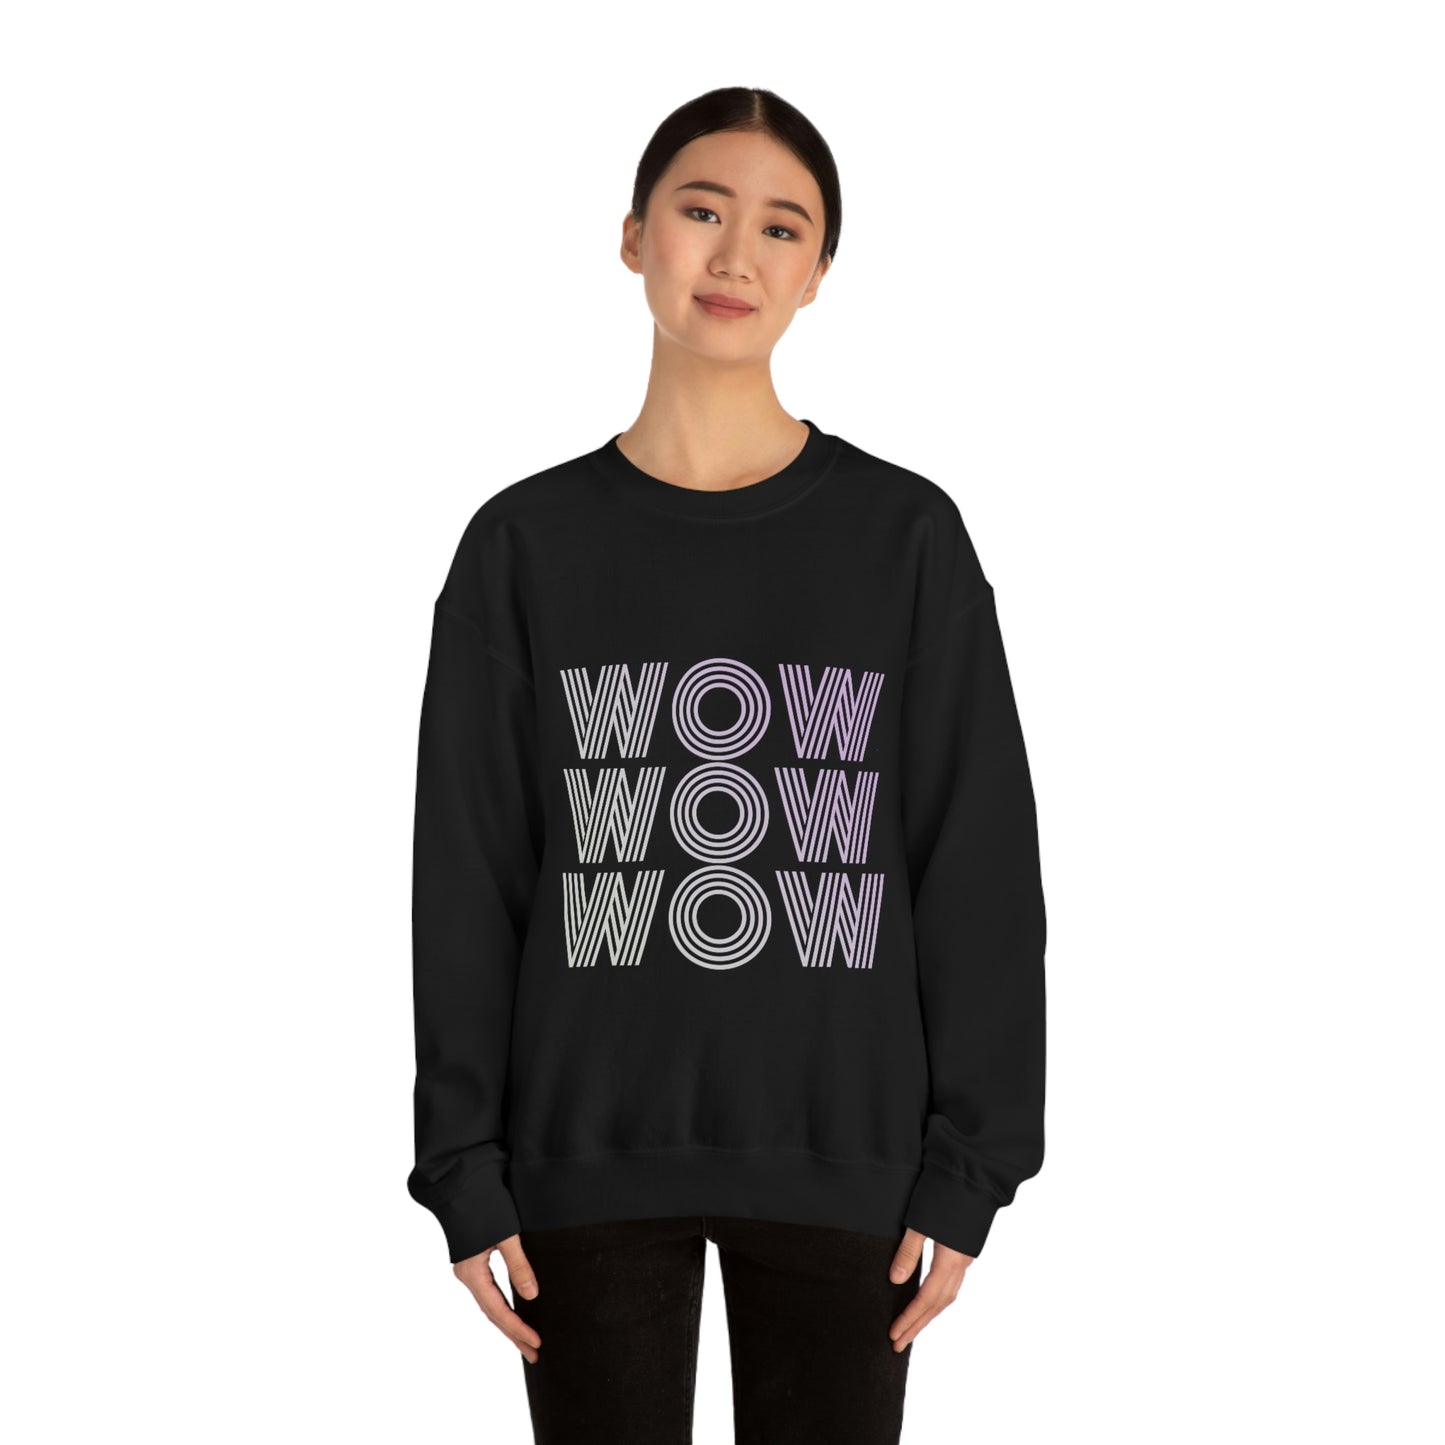 Womens Wow Logo Sweatshirt